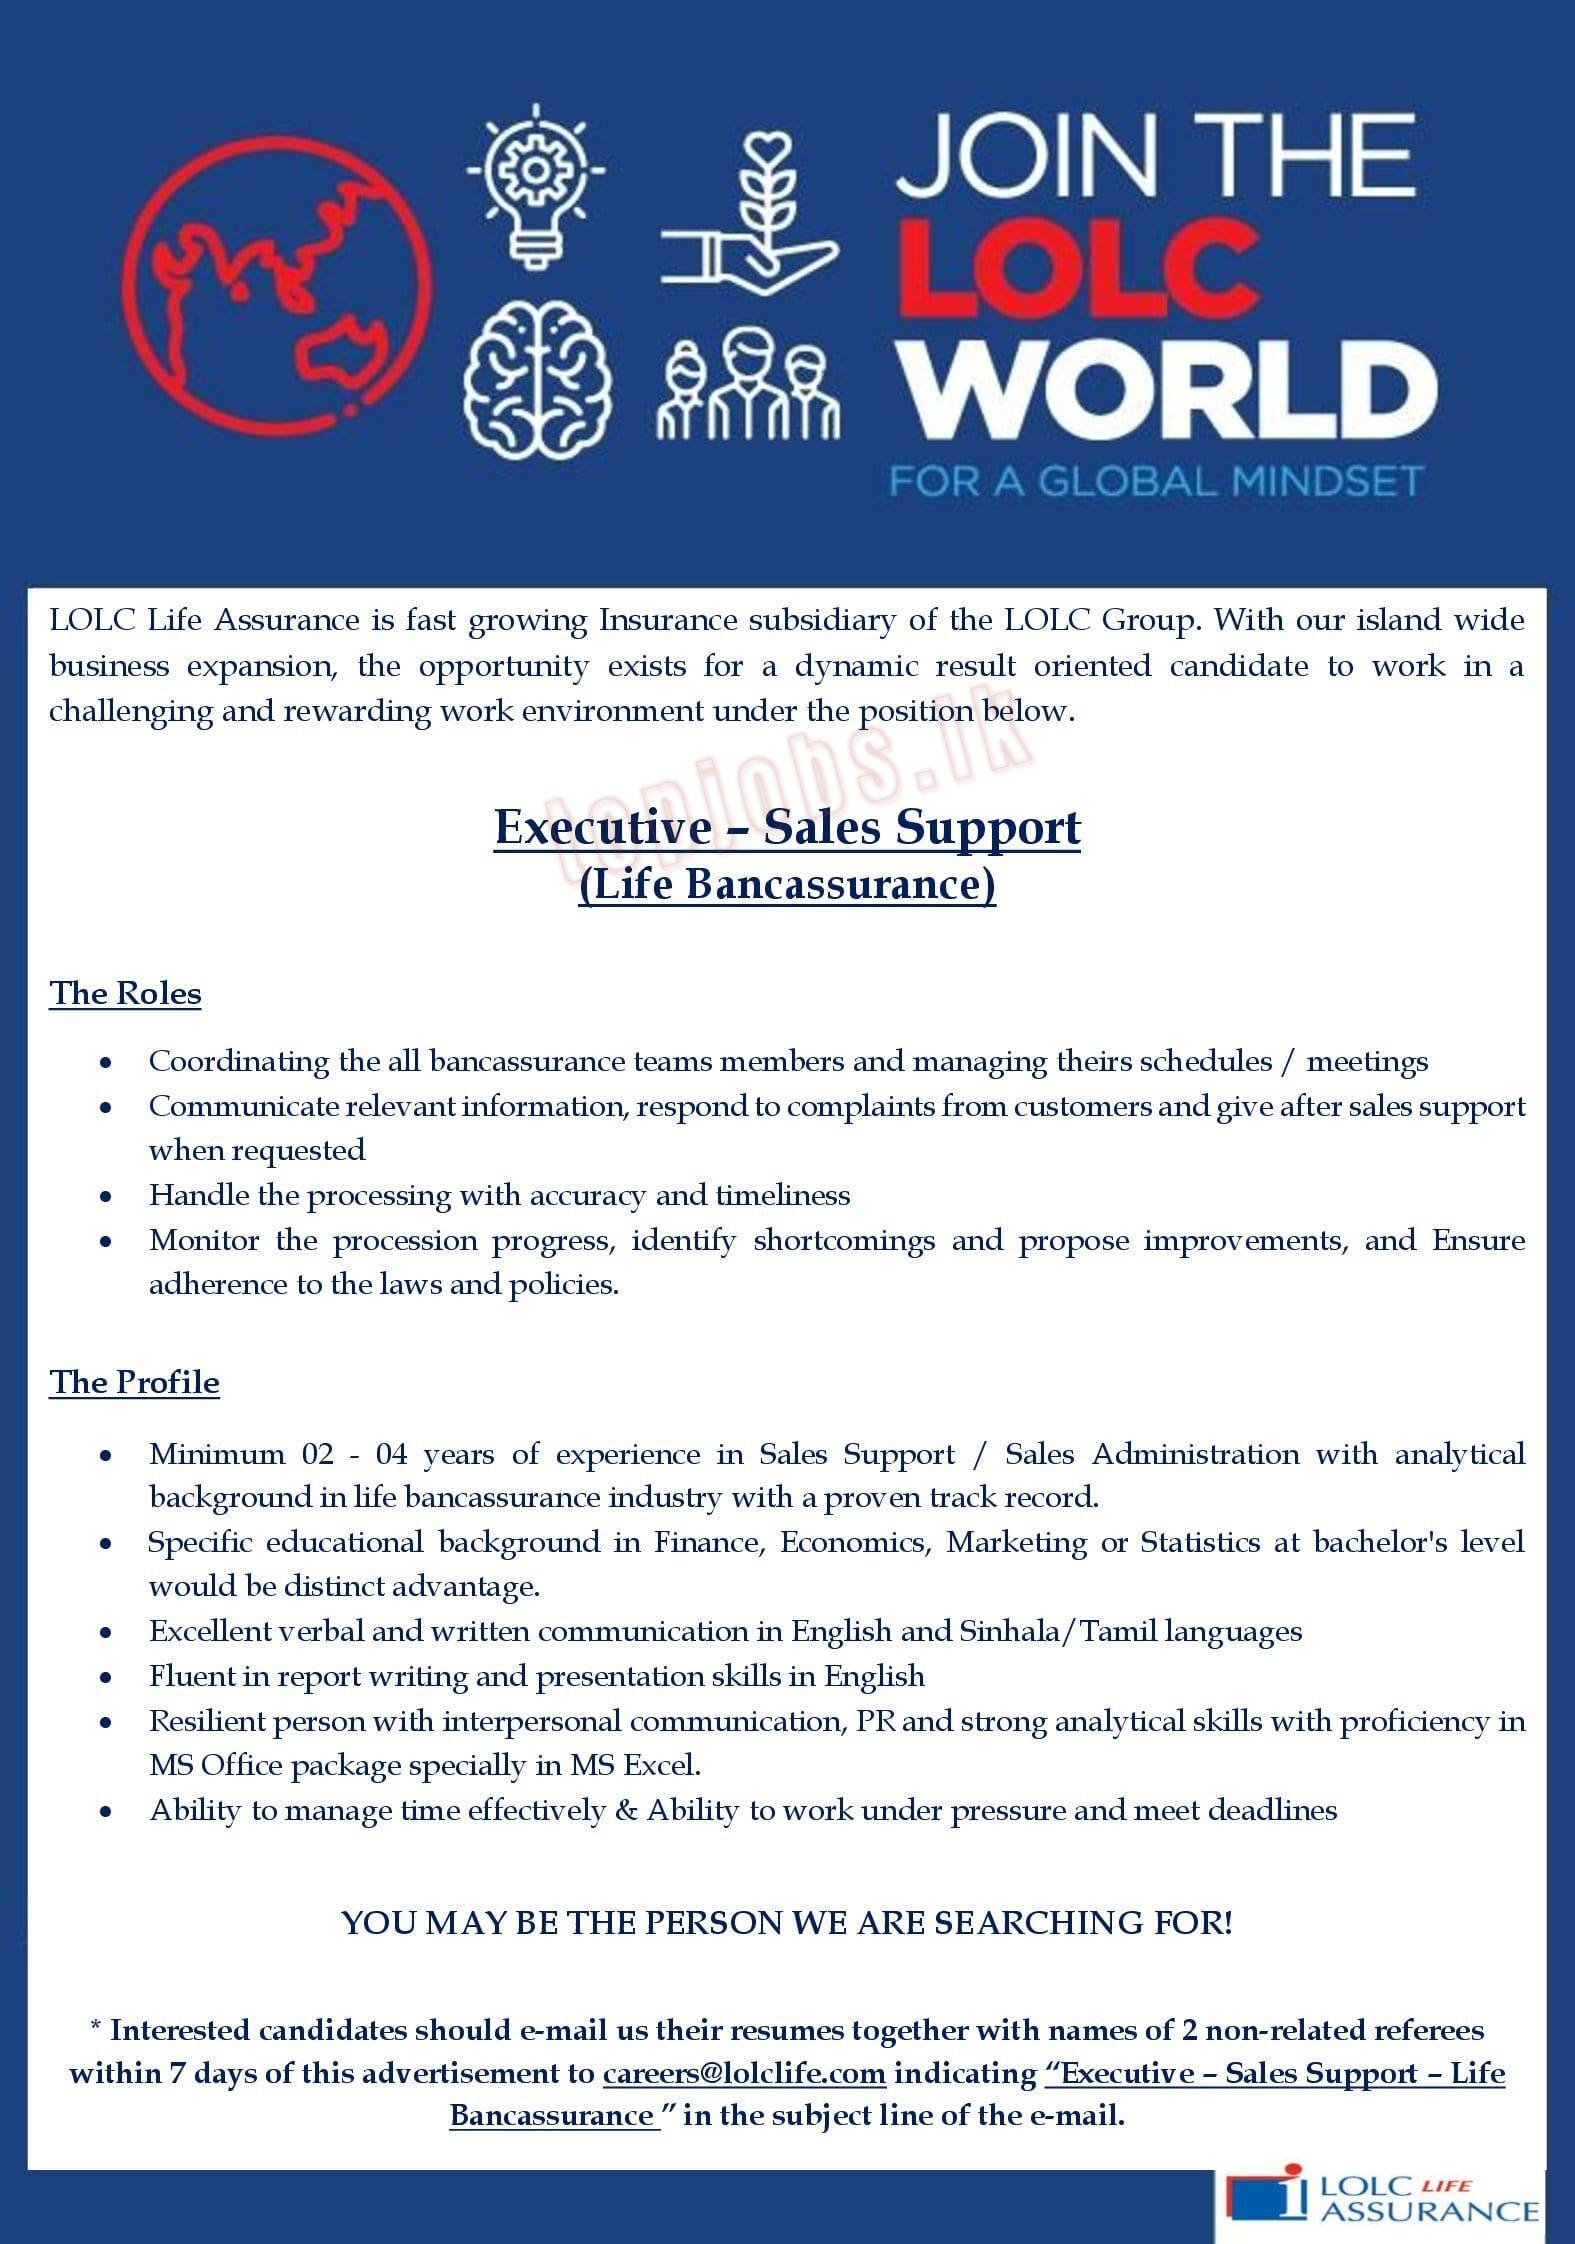 Executive - Sales Support (Life Bancassurance) - LOLC Holdings PLC Jobs Vacancies